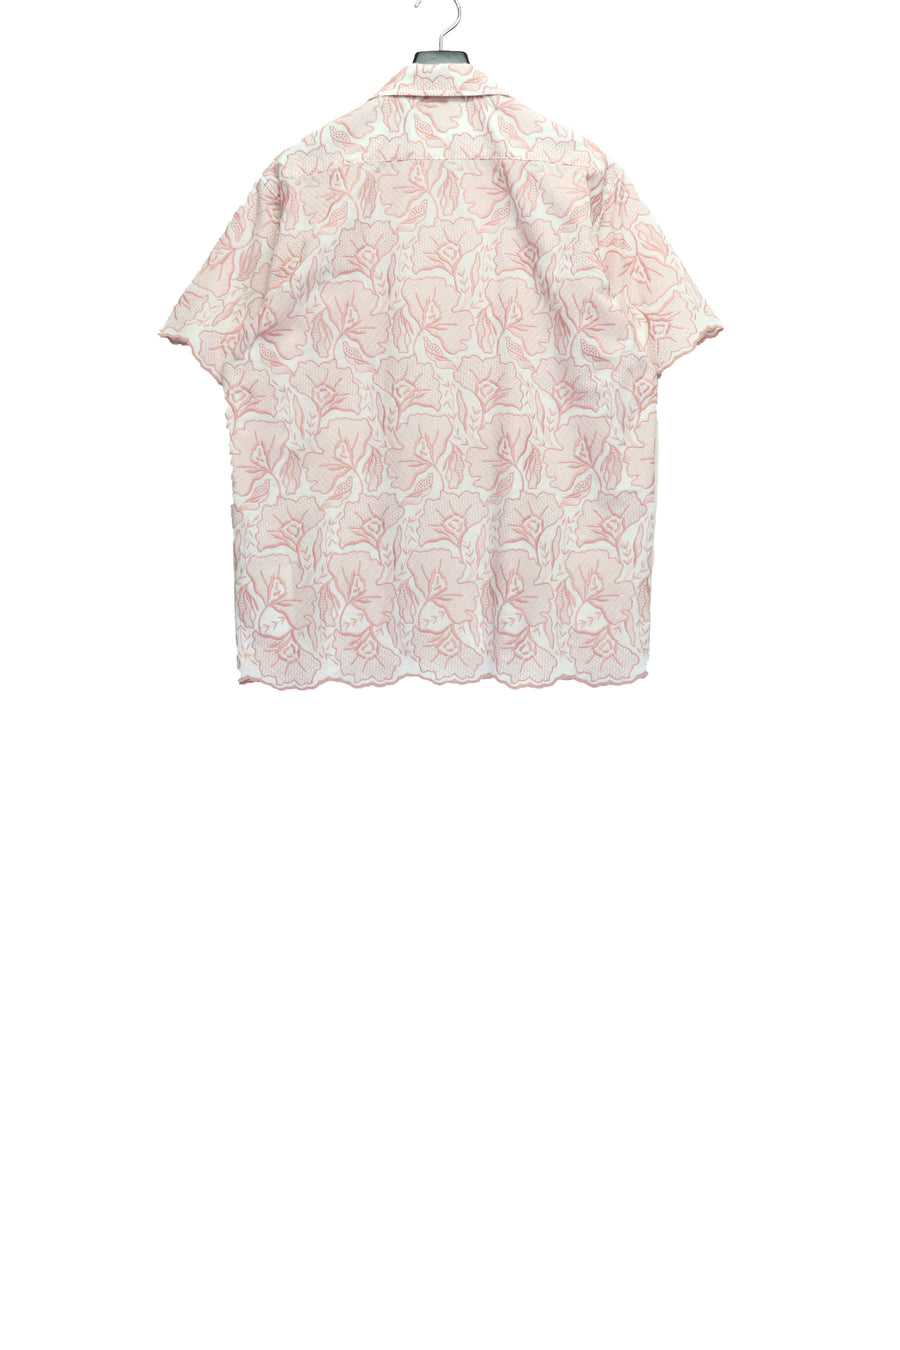 TOGA VIRILIS  Lace S/S shirt(PINK)